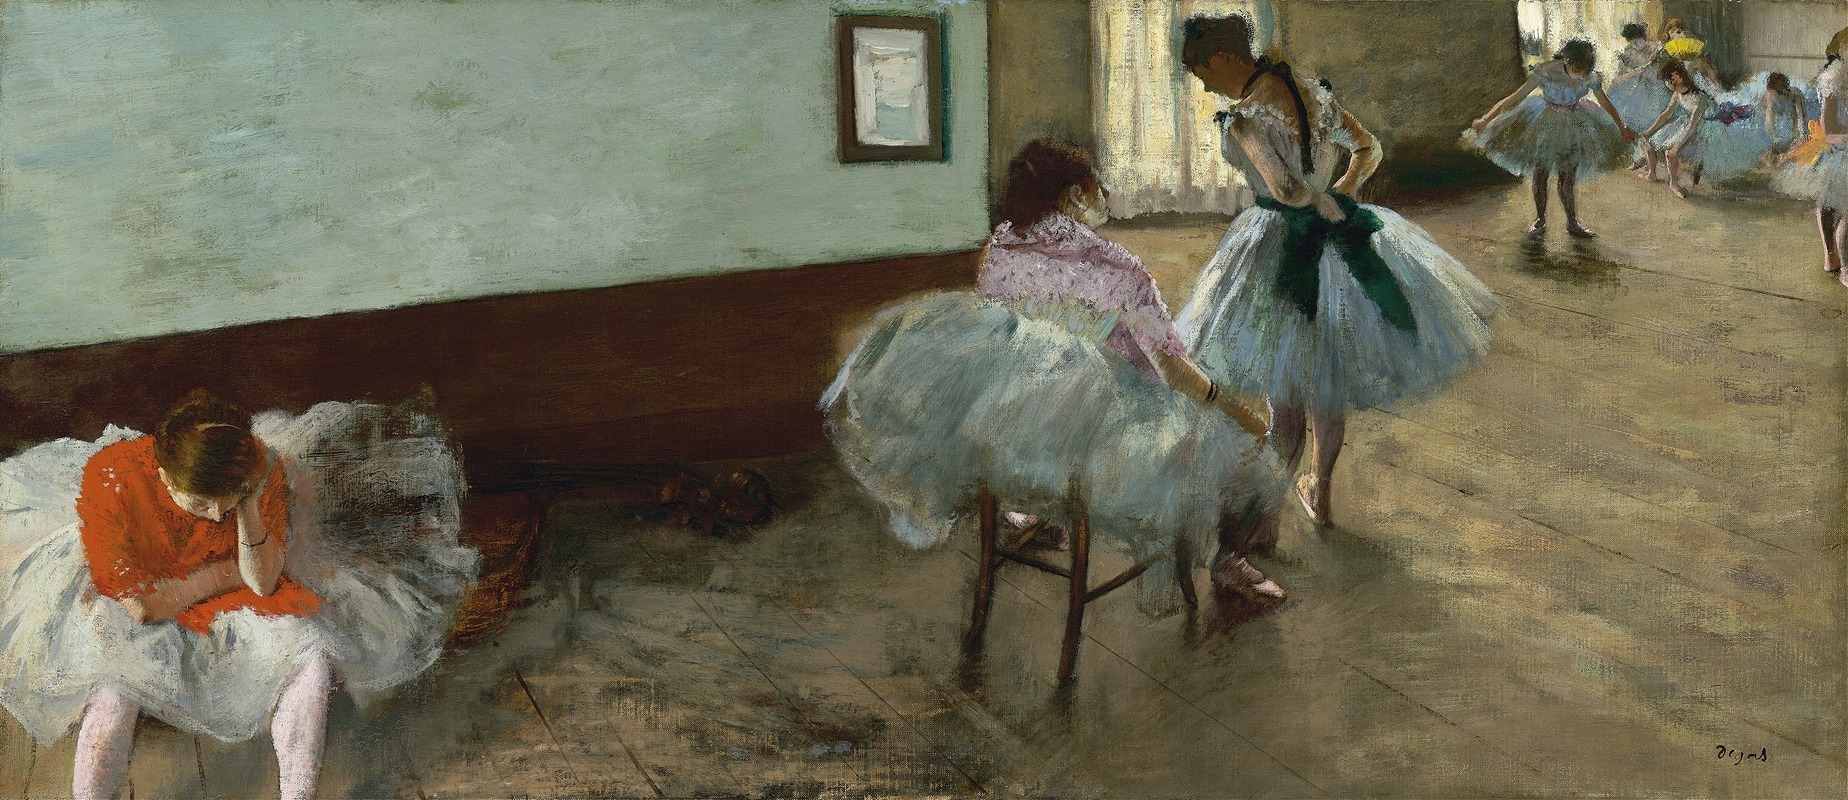 Edgar Degas - The Dance Lesson